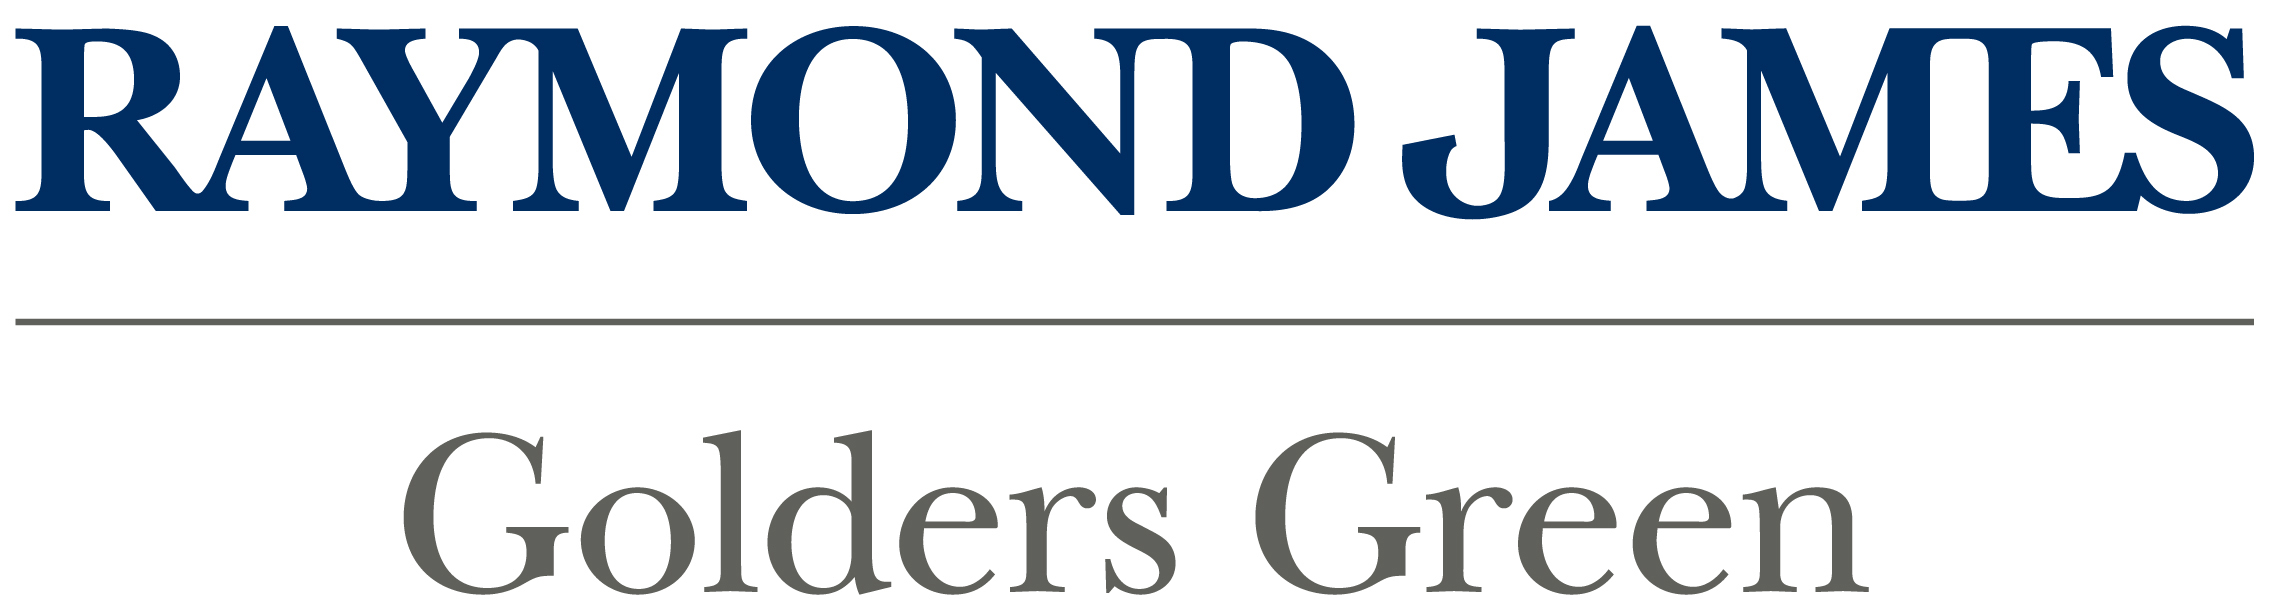 Raymond James, Golders Green Logo